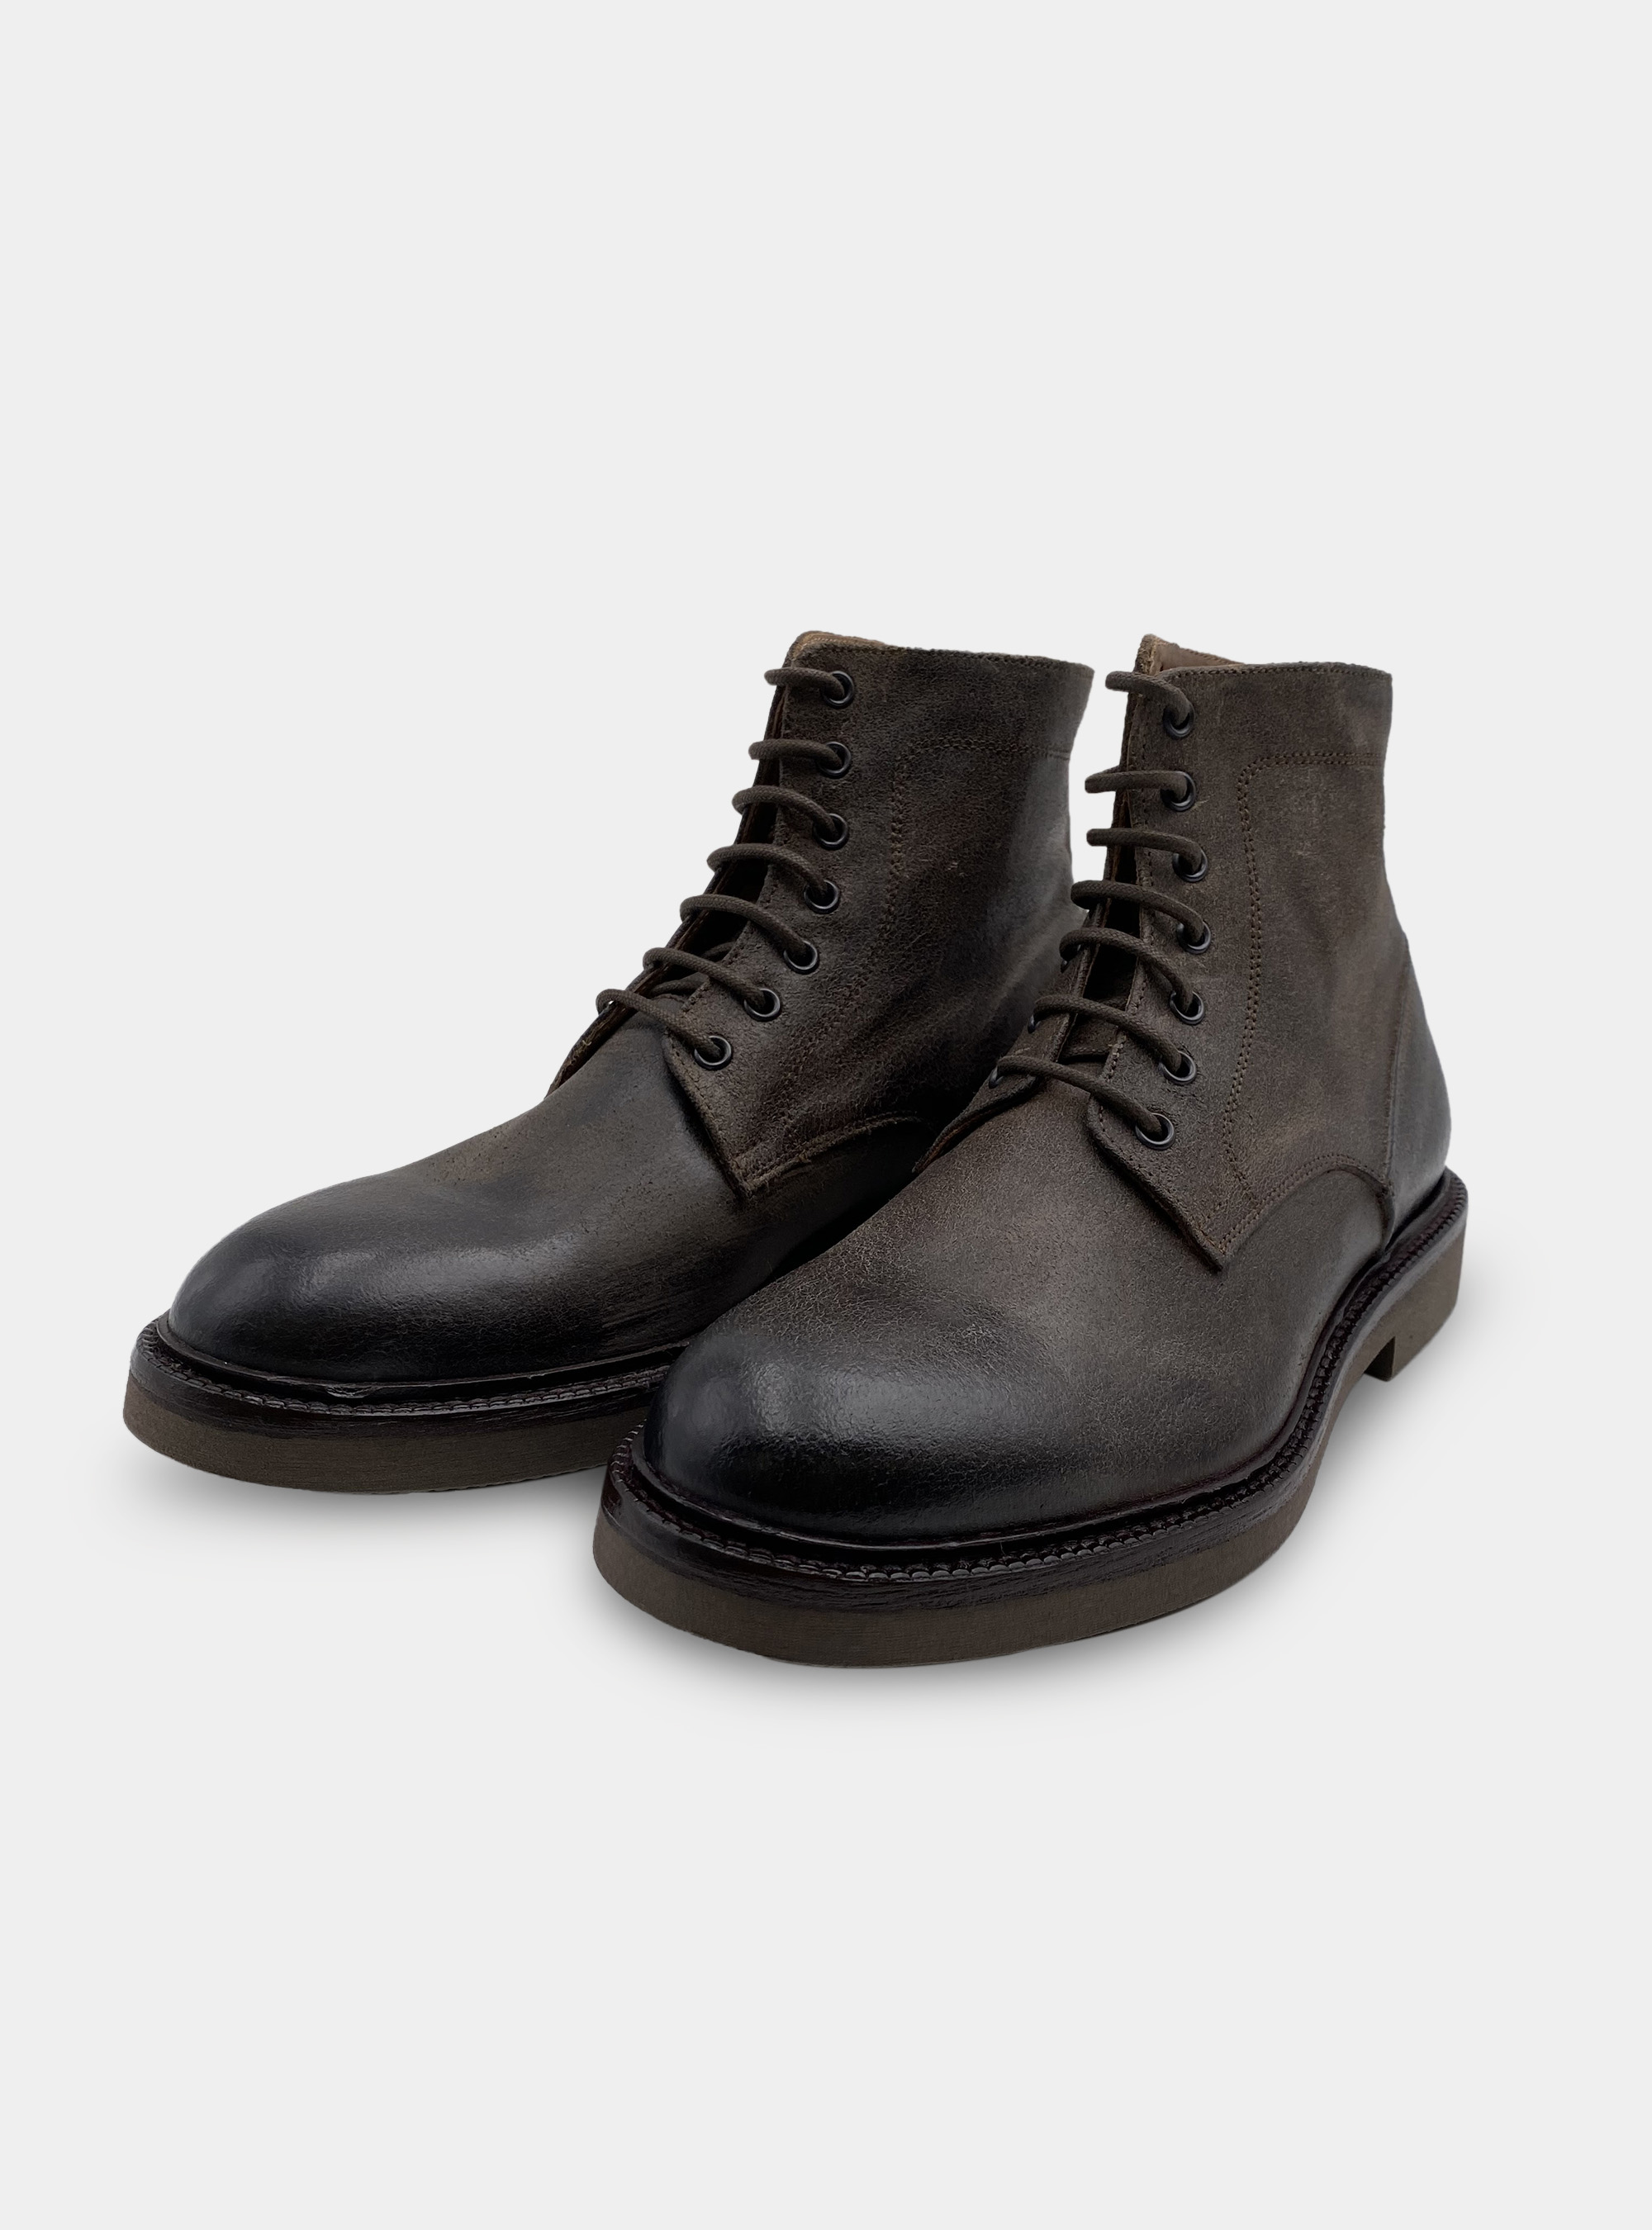 Half boots in vintage leather with strings | GutteridgeUS - SC1251UOGU